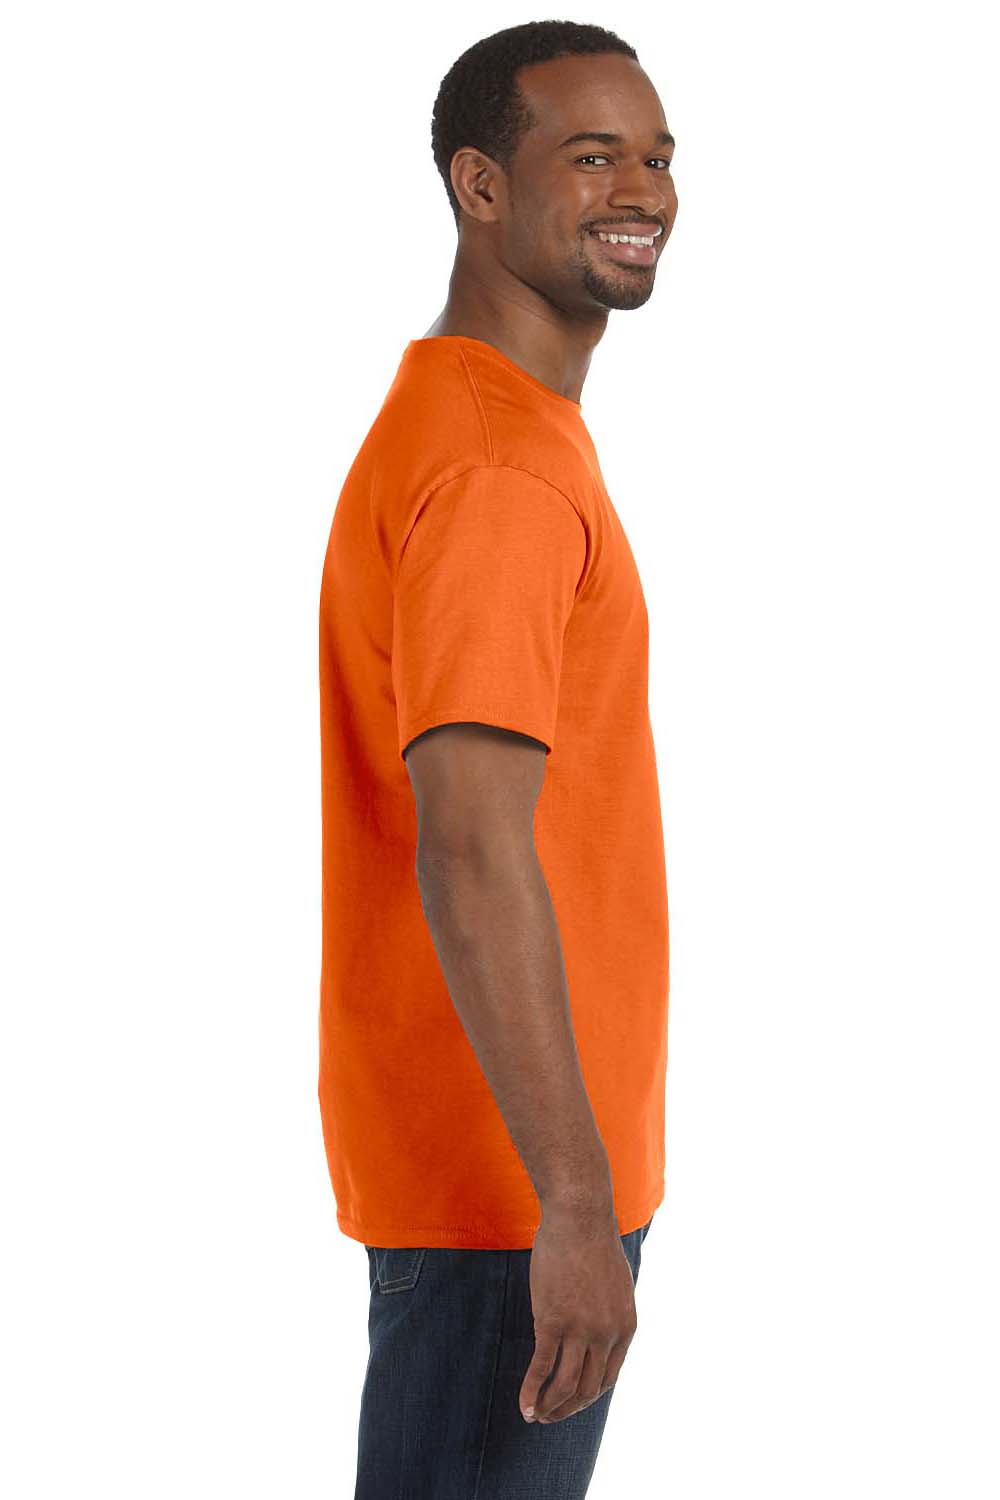 Hanes 5250T Mens ComfortSoft Short Sleeve Crewneck T-Shirt Orange Side